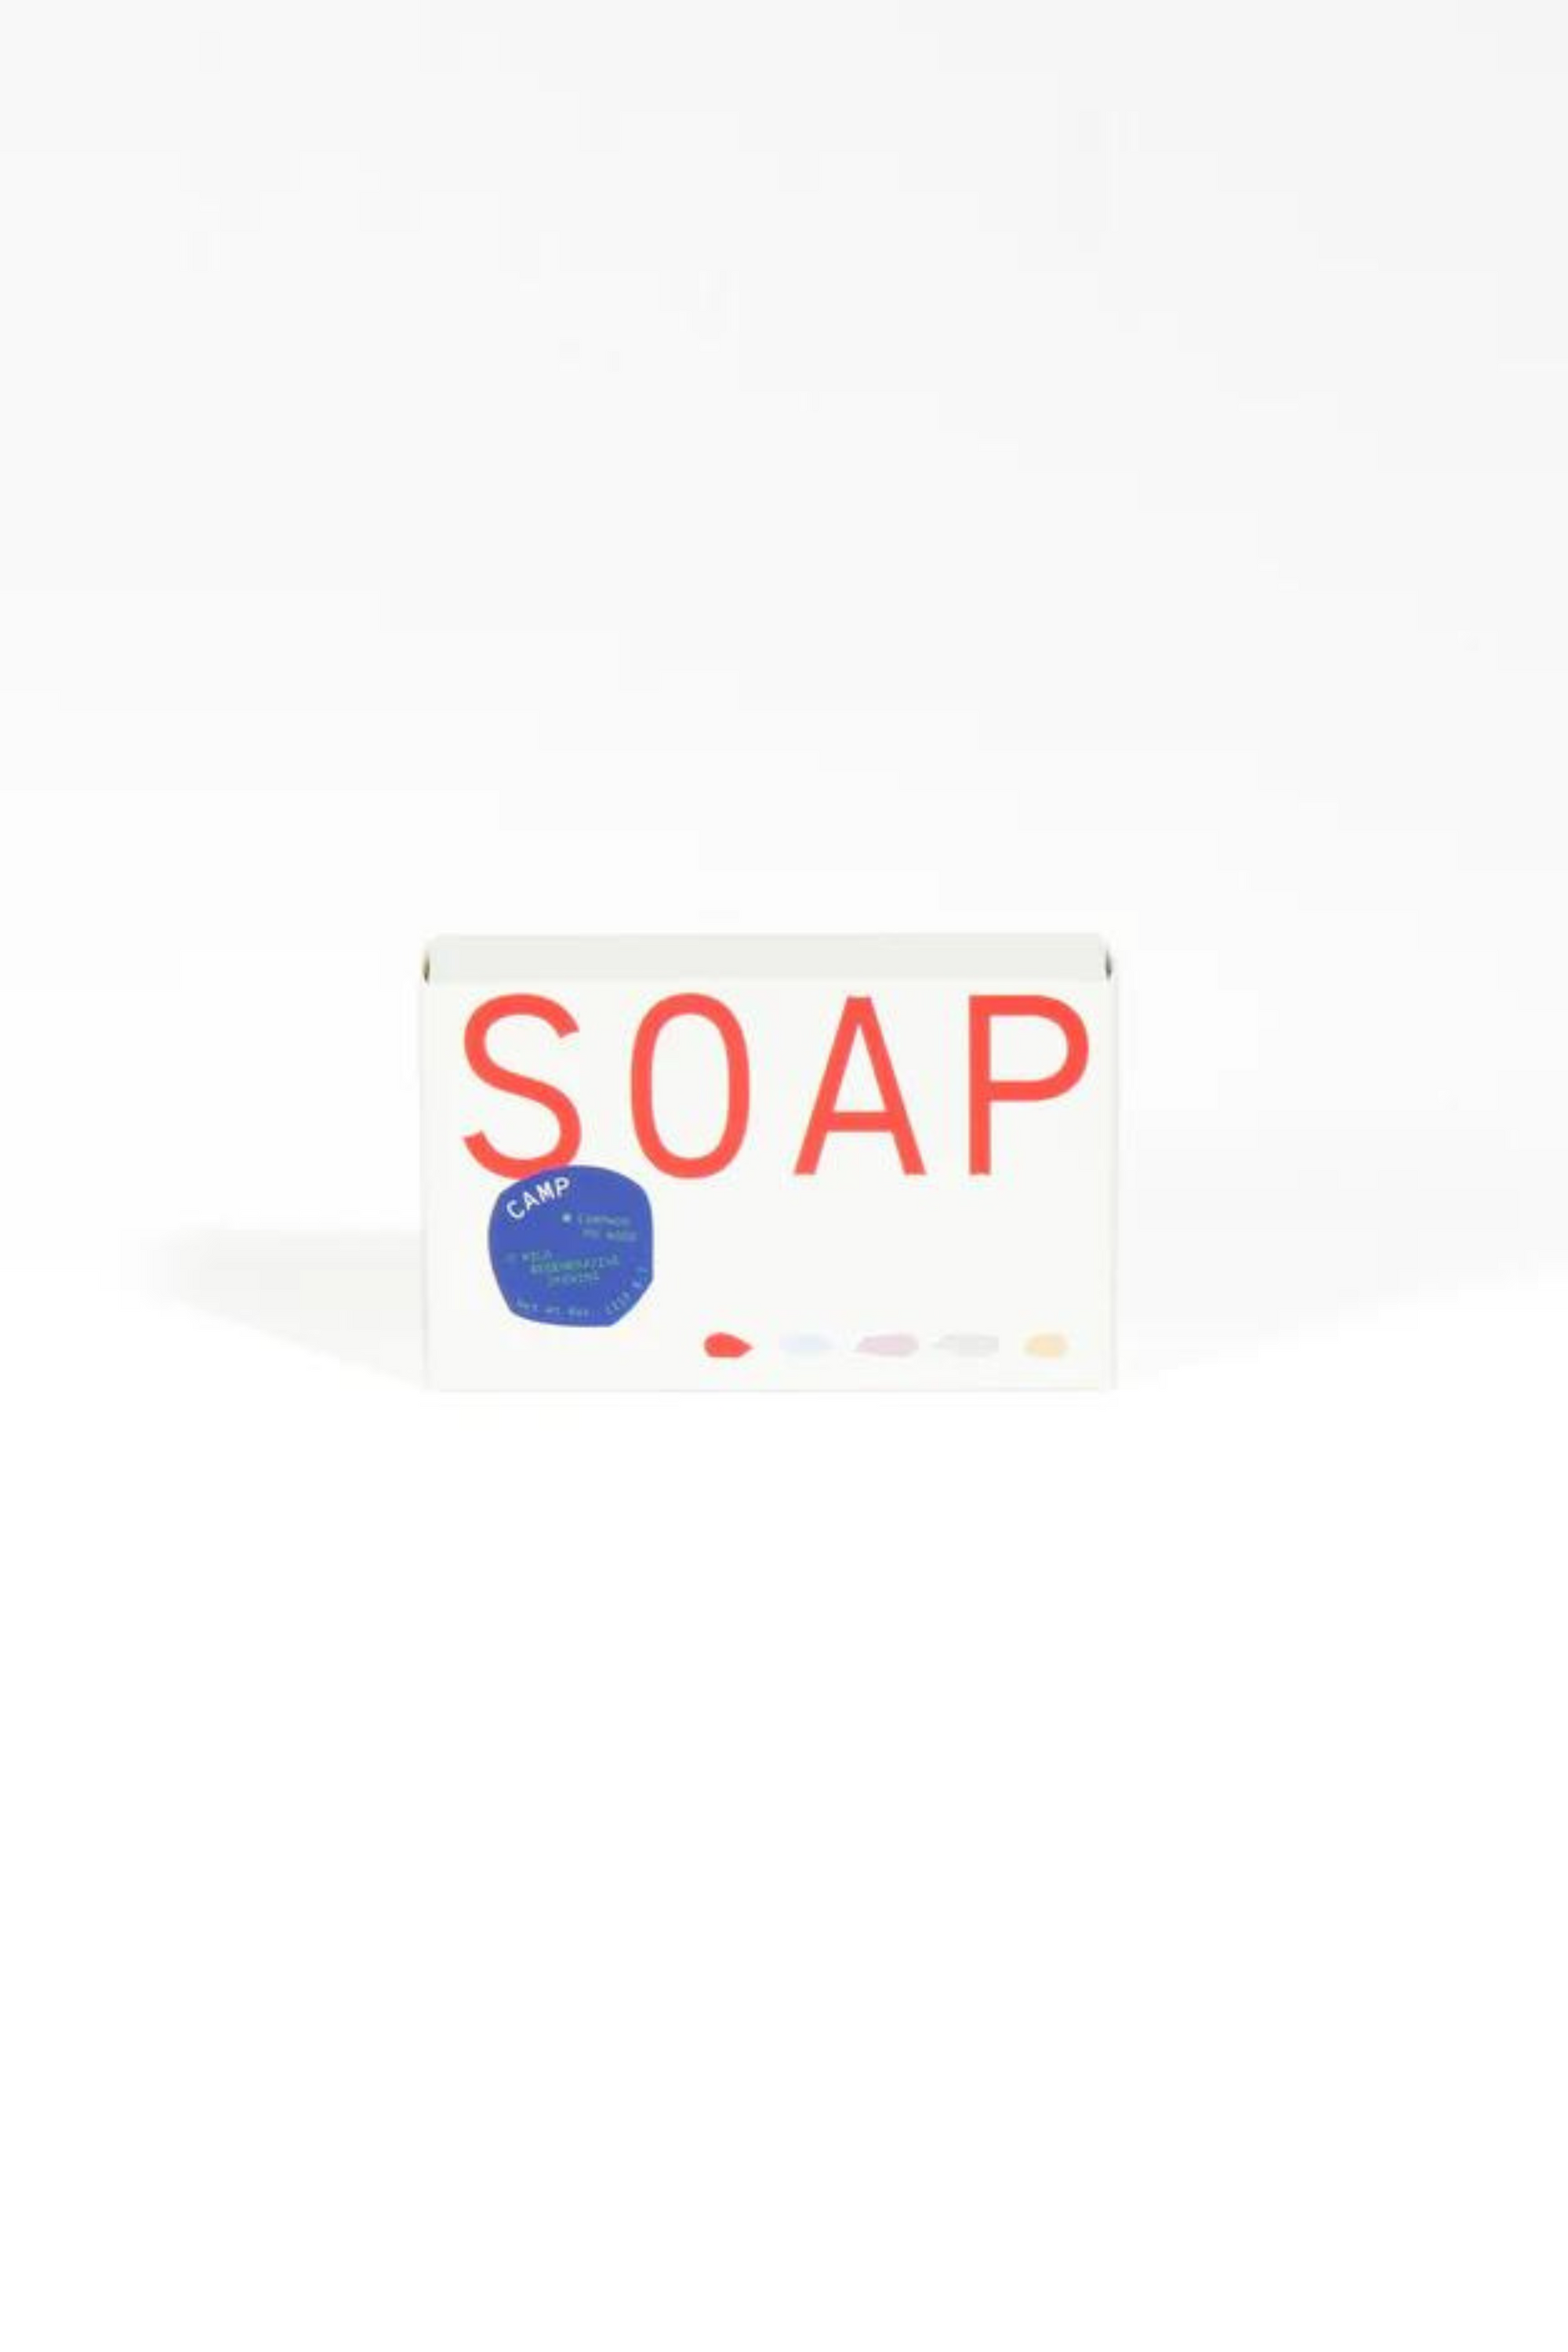 Camp Soap